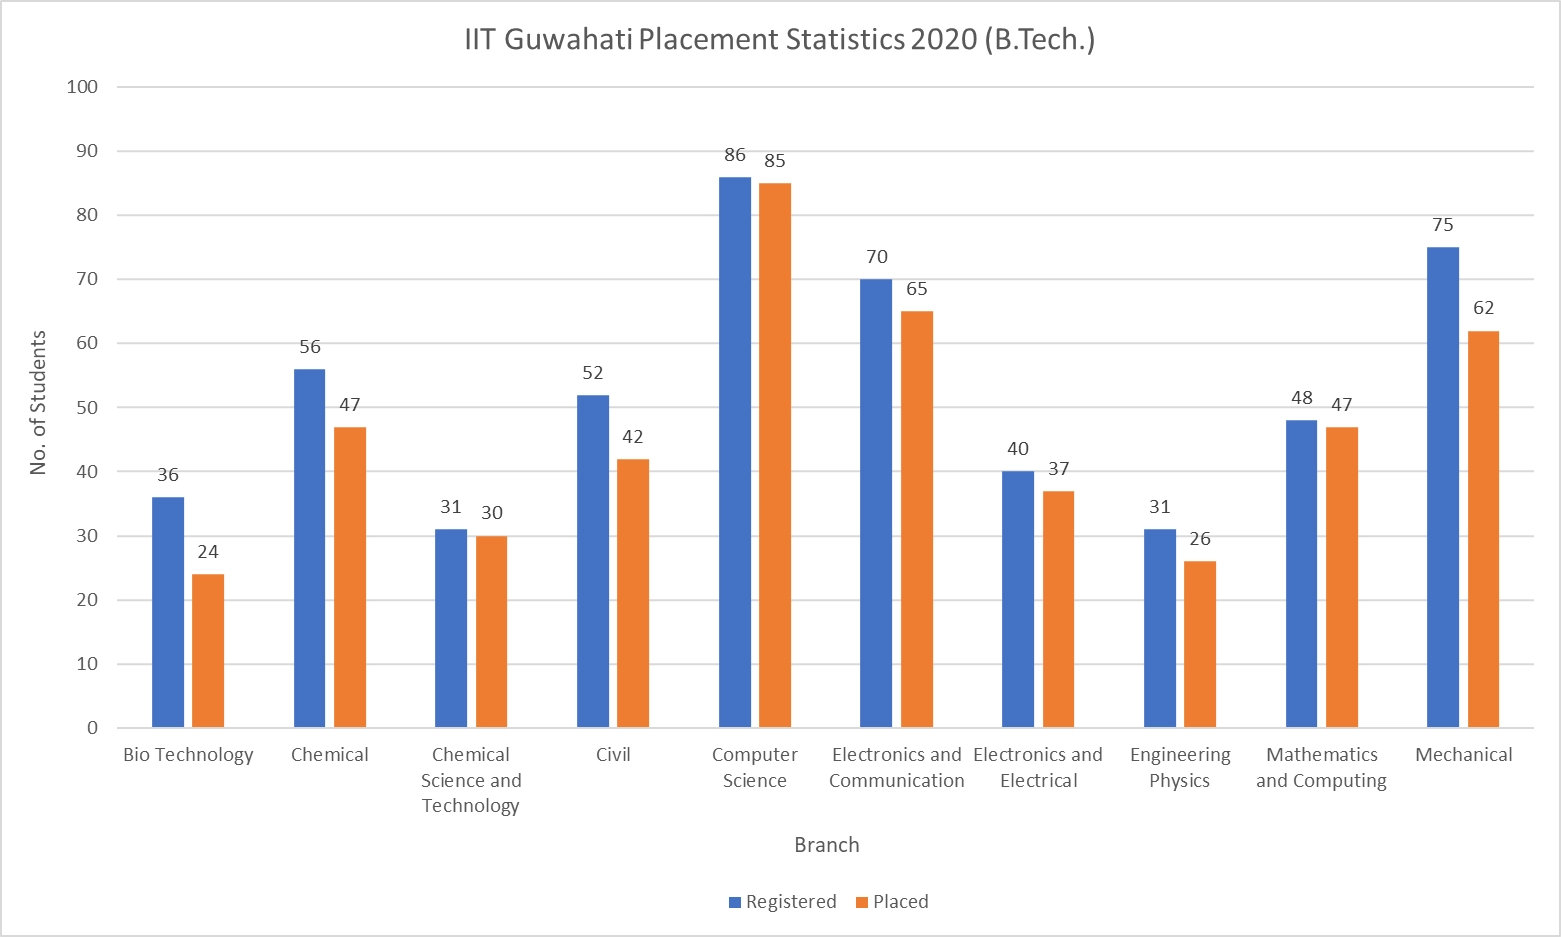 IIT Guwahati Placement Statistics 2020